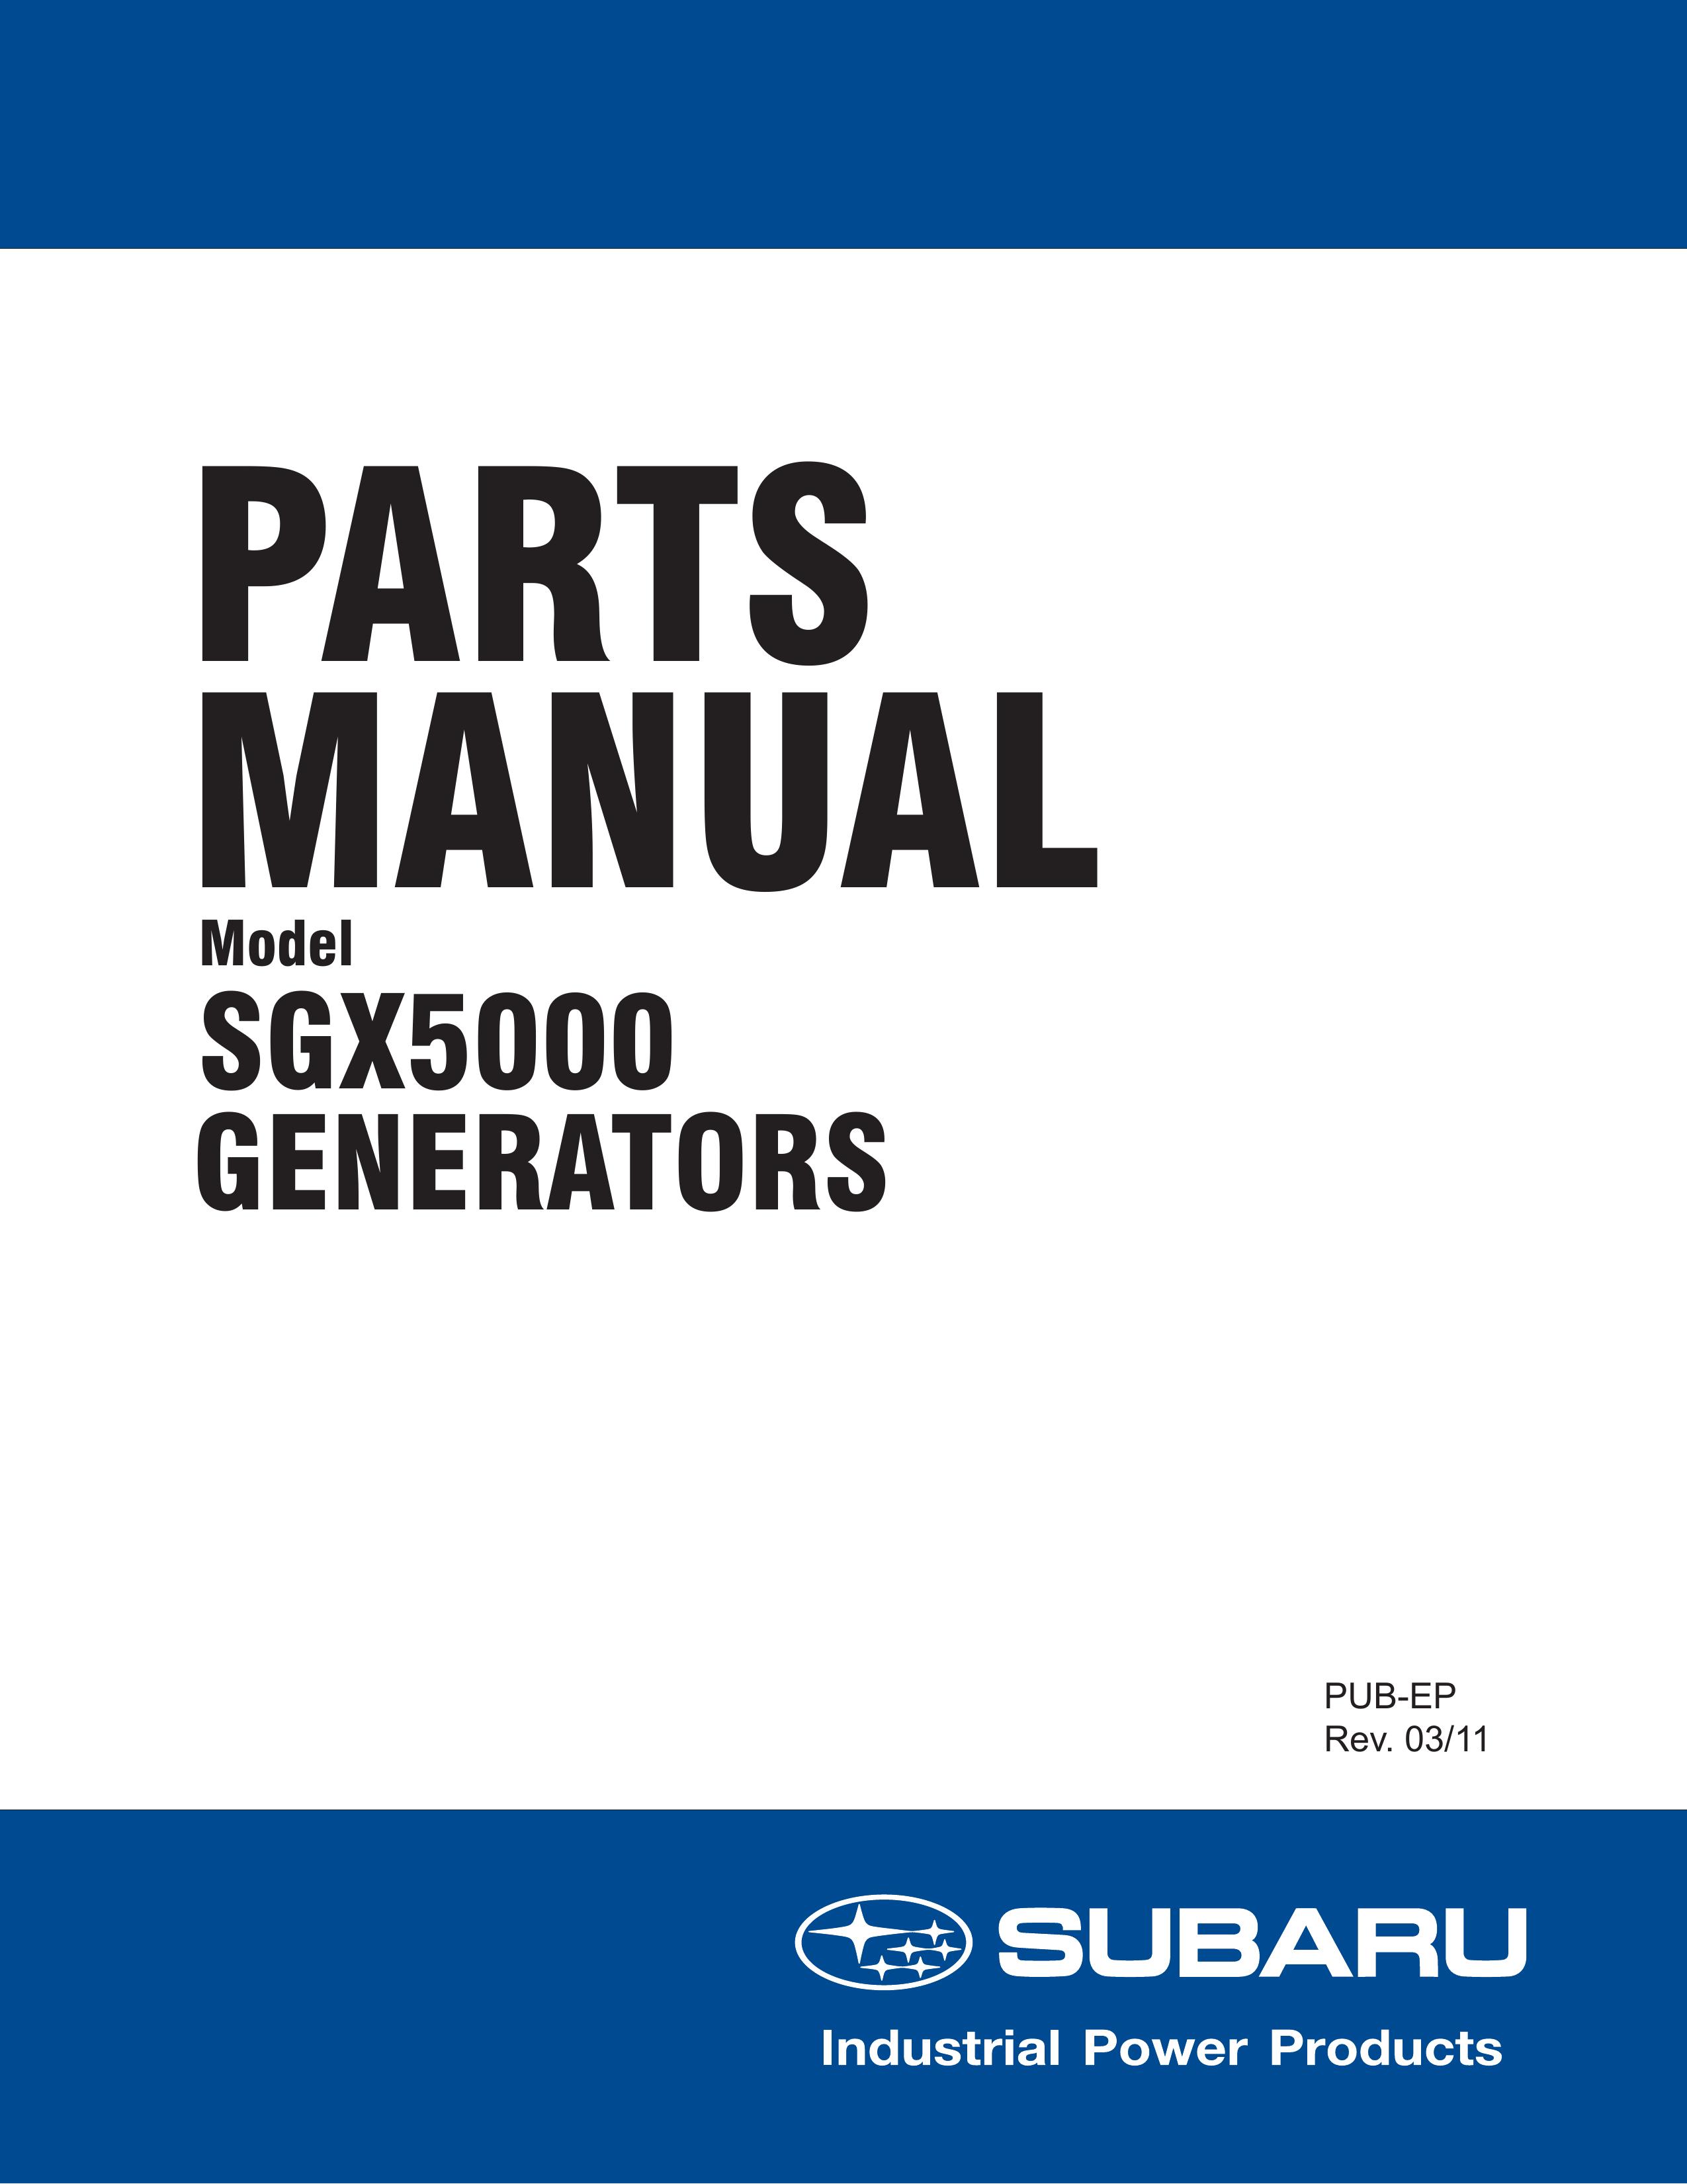 Subaru SGX5000 Portable Generator User Manual